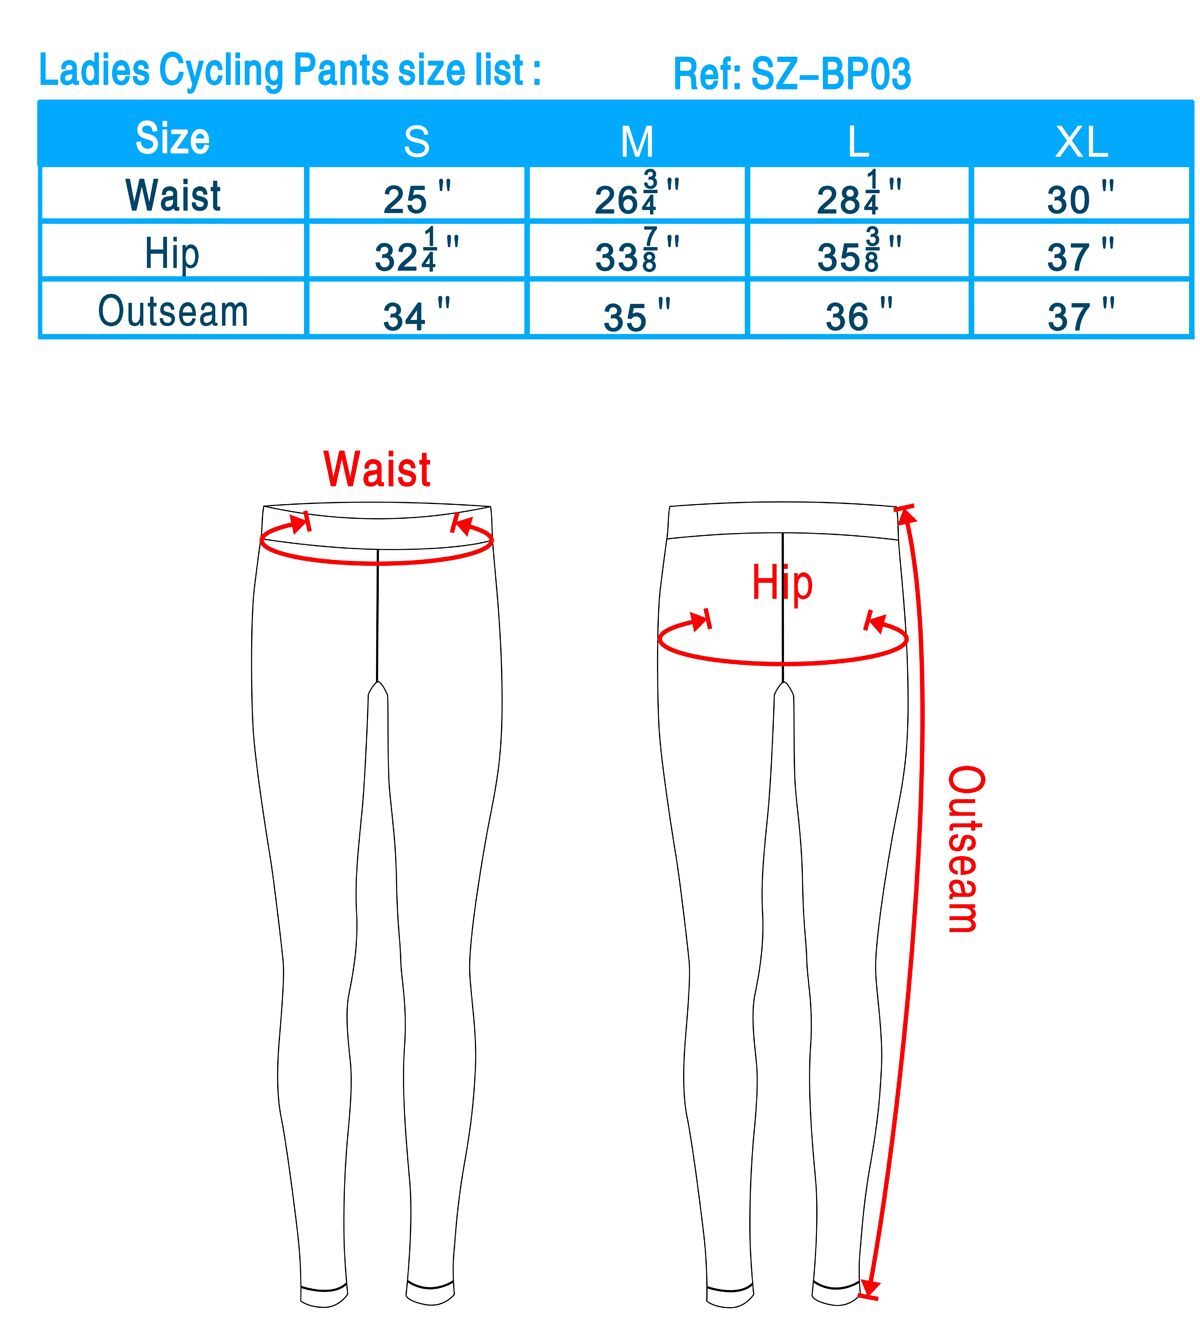 Ladies Cycling Pants size list